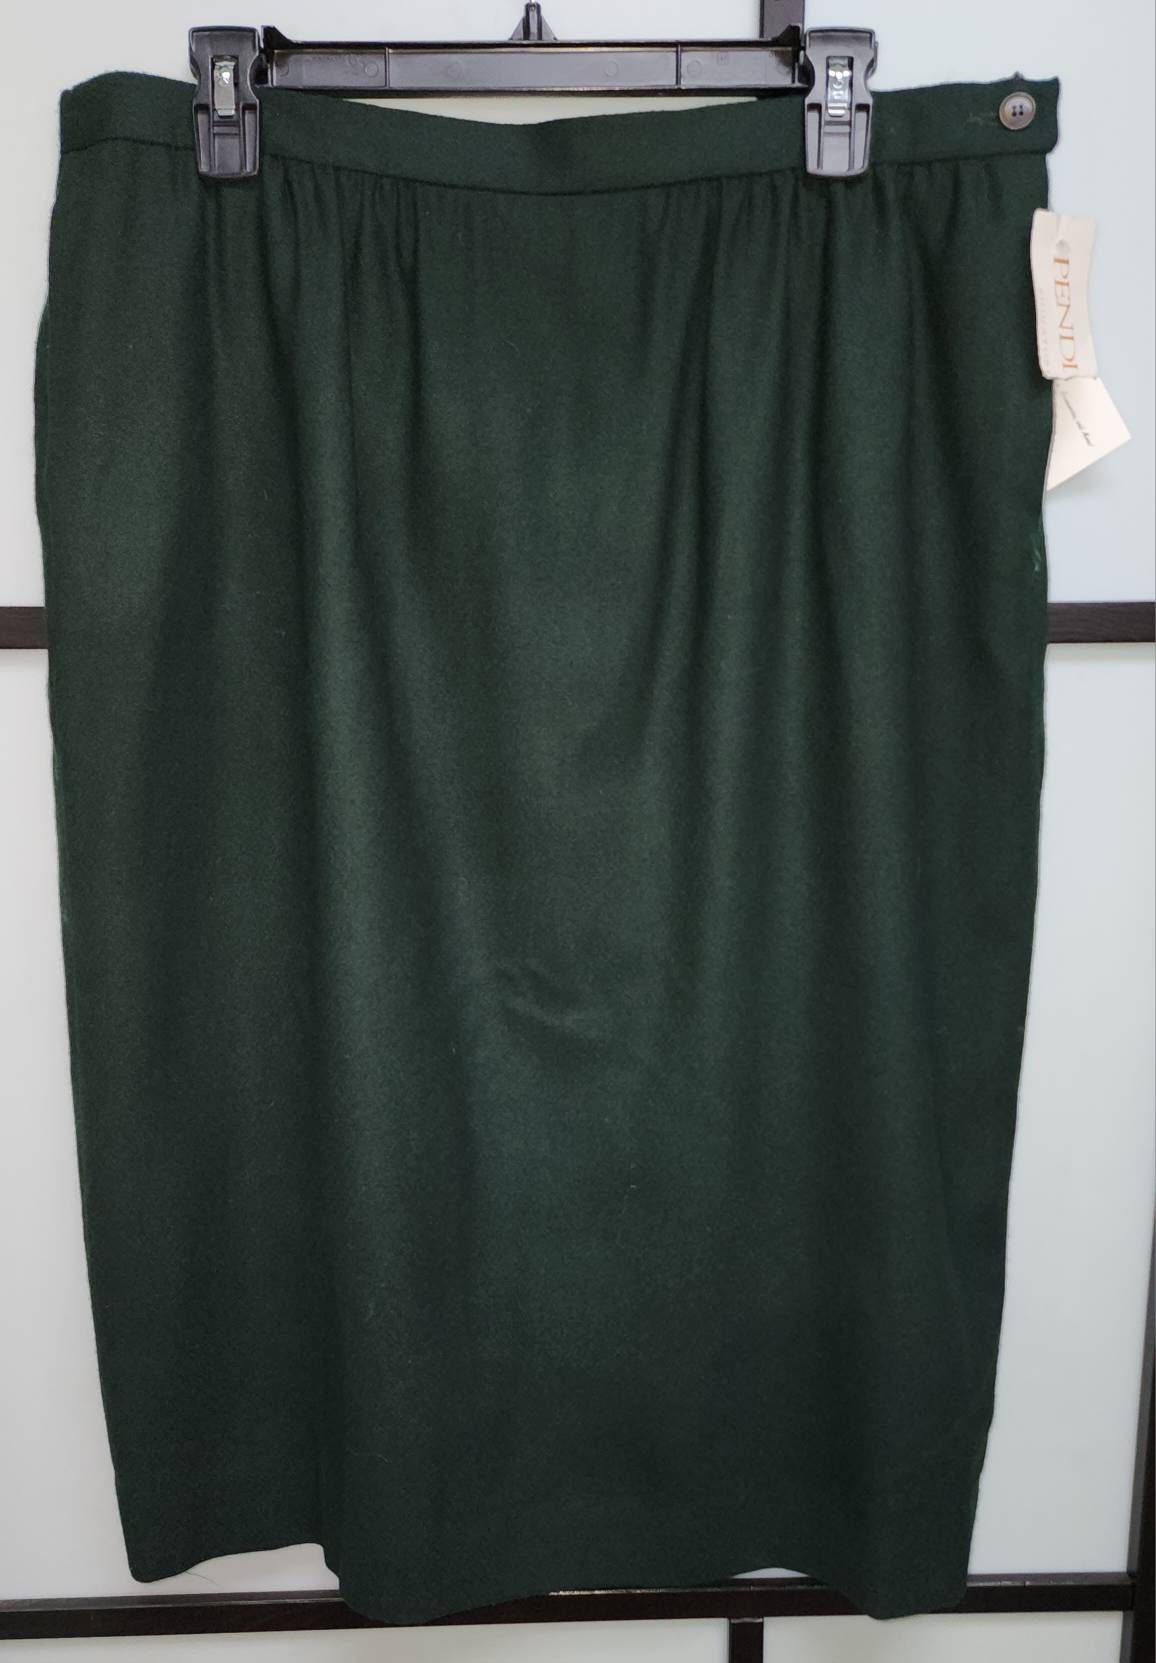 Unworn Vintage Skirt 1980s 90s Pendleton Plus Size Dark Green Wool Pencil Skirt Straight Skirt NWT Rockabilly Pinup XL